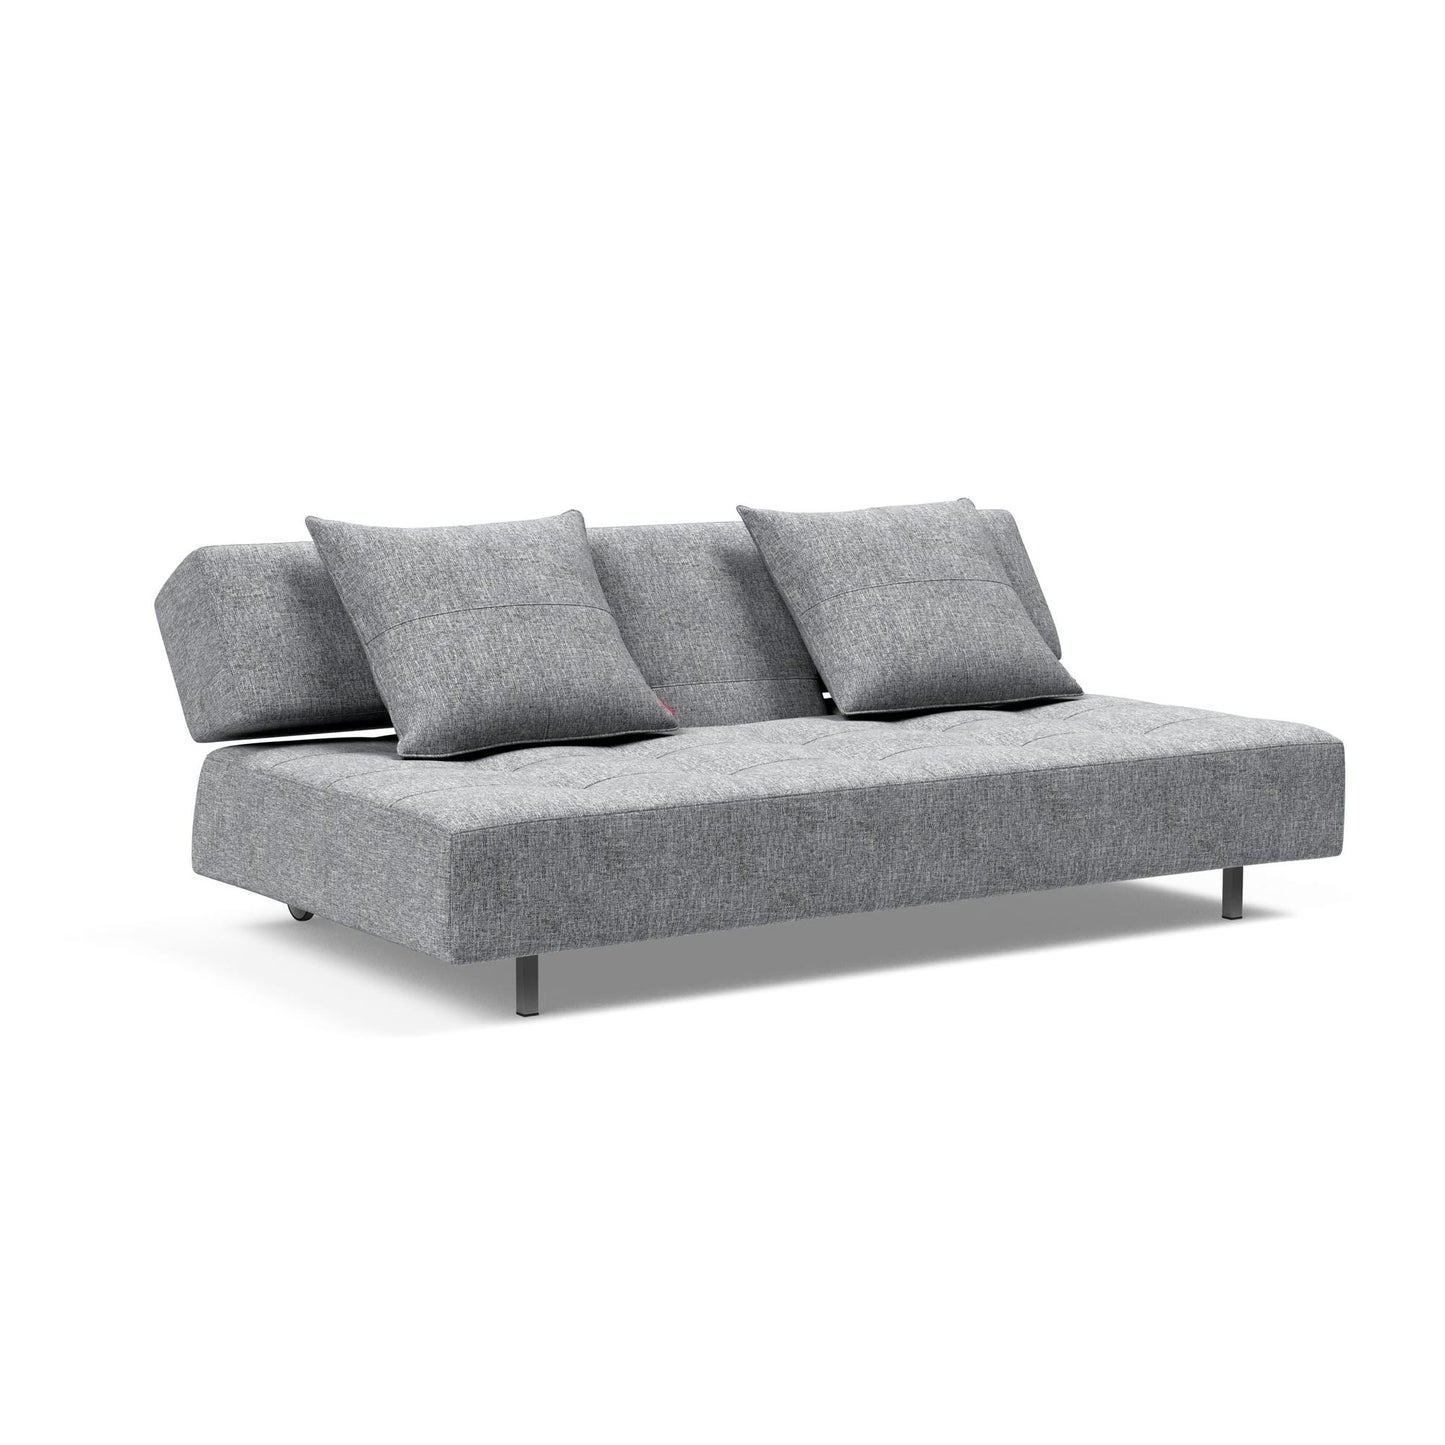 Long Horn Deluxe Excess Sofa Bed in Twist Granite